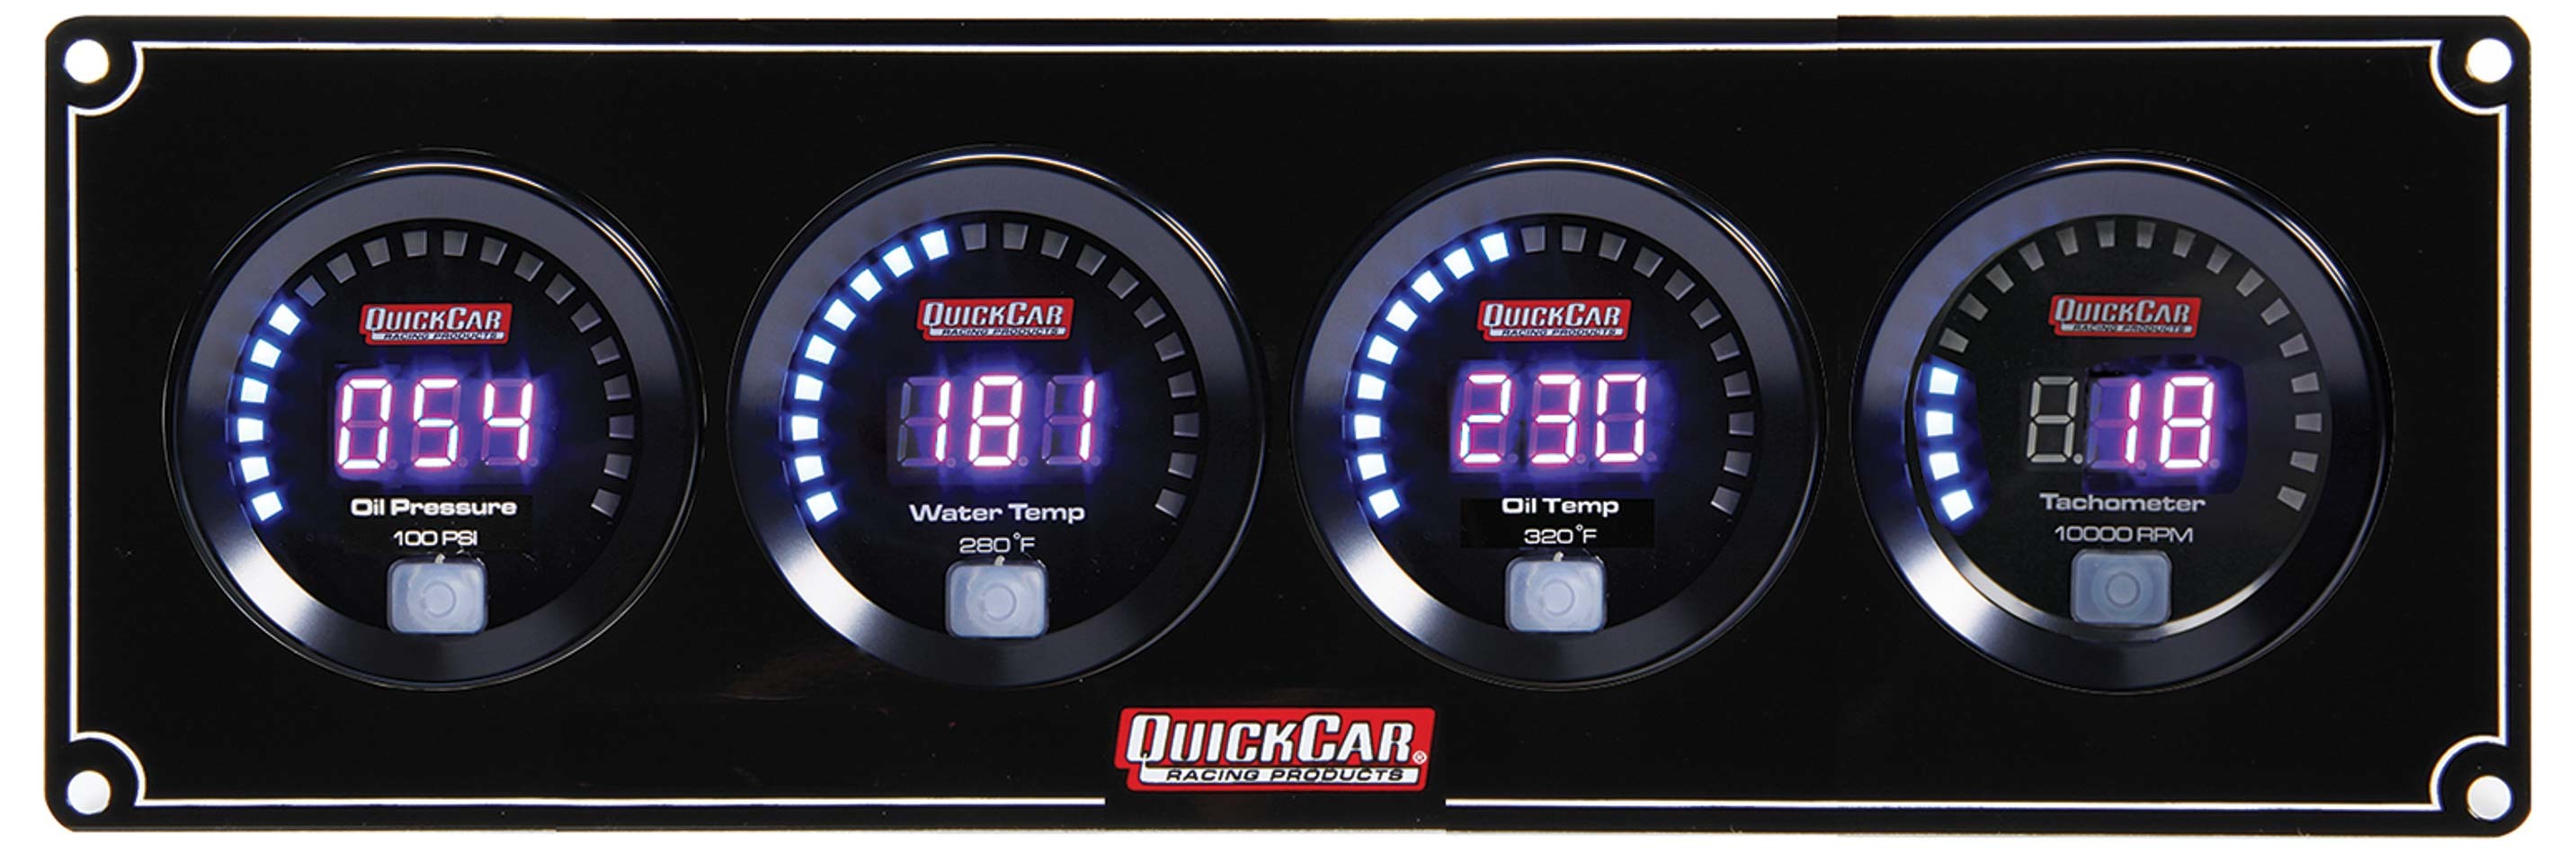 QuickCar 67-3041 - Gauge Panel Assembly, Digital, Oil Pressure / Water Temperature / Oil Temperature / Tachometer, Black Face, Kit